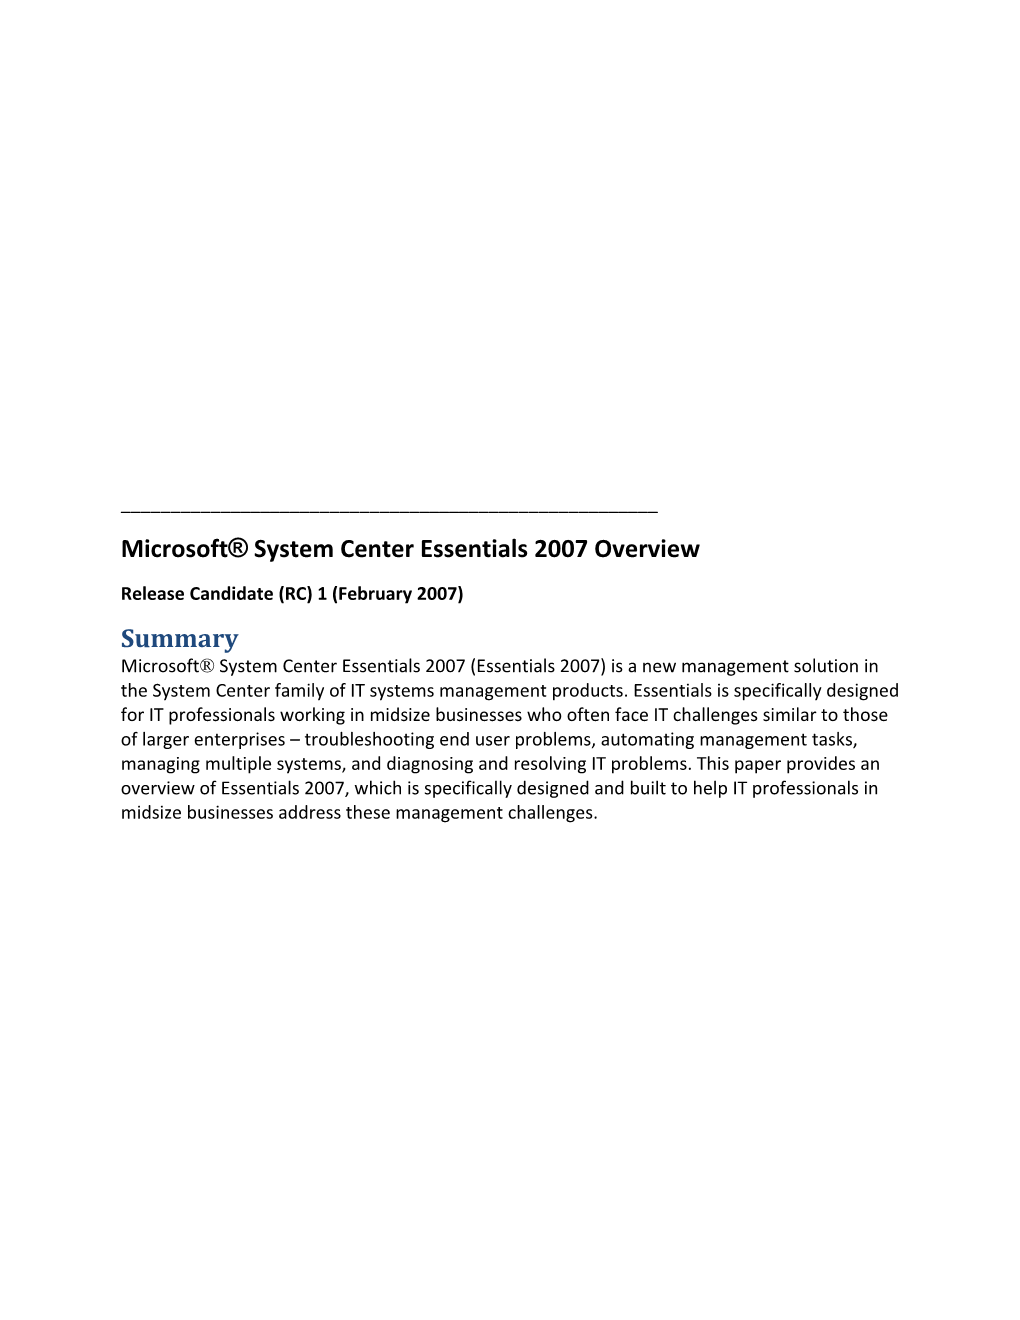 Microsoft System Center Essentials Overview